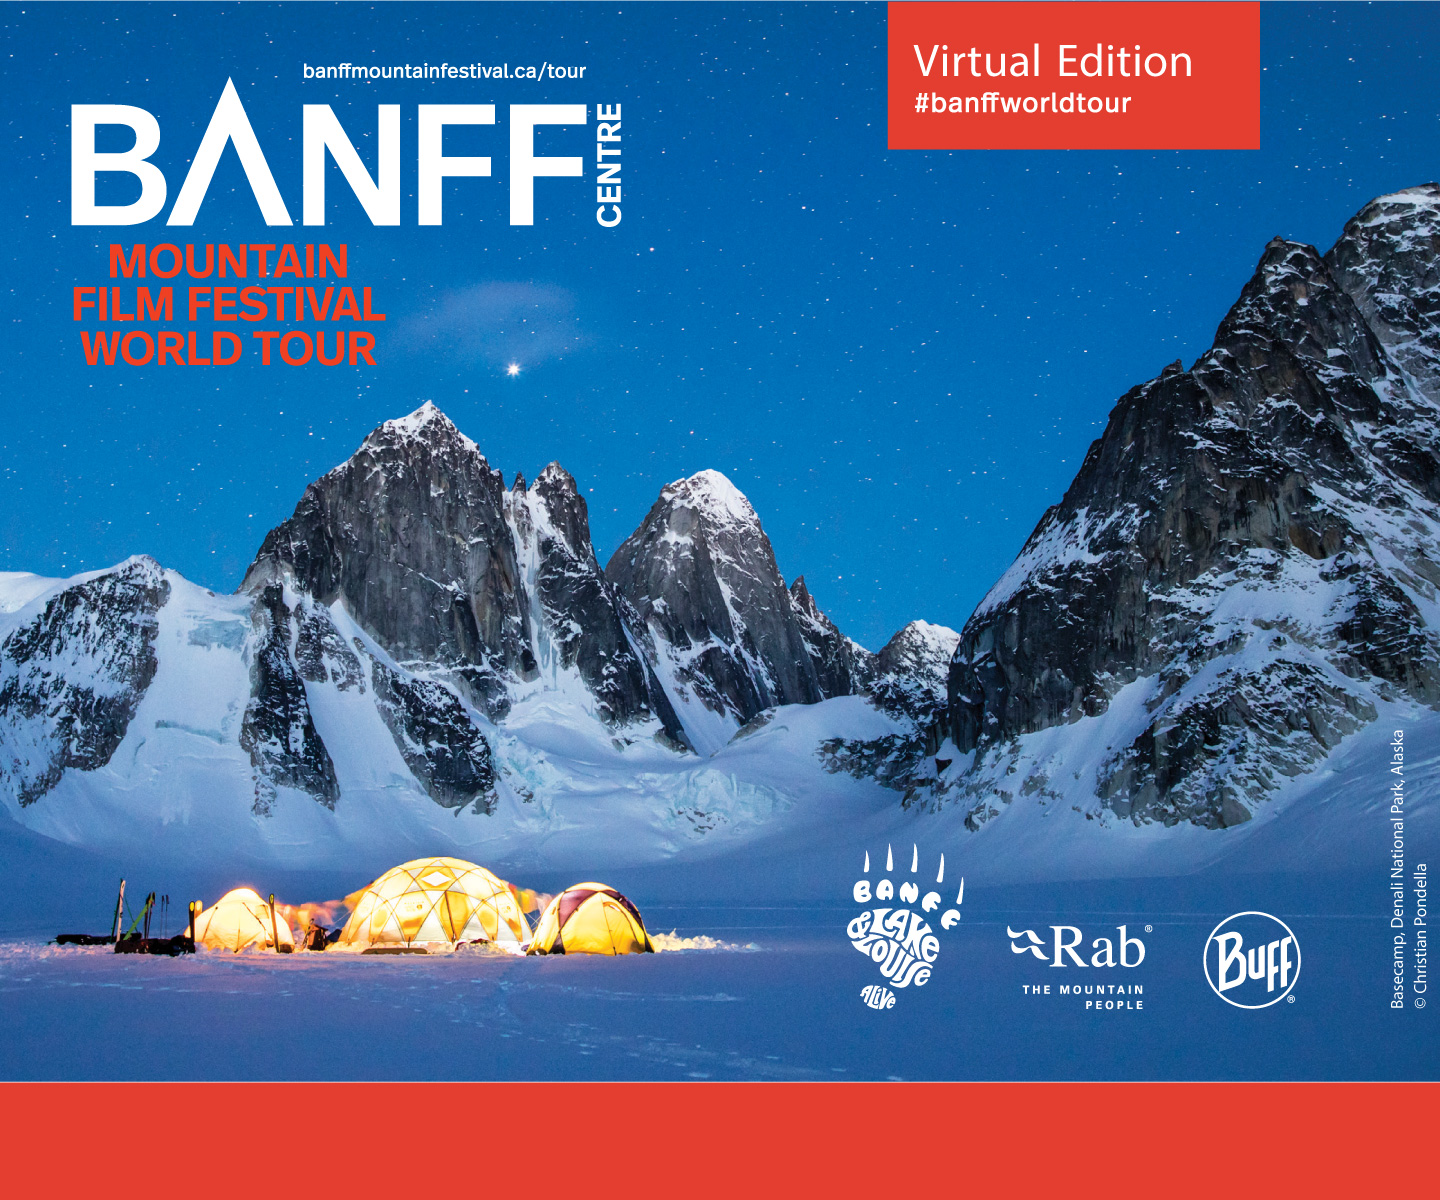 bannf mountain film festival